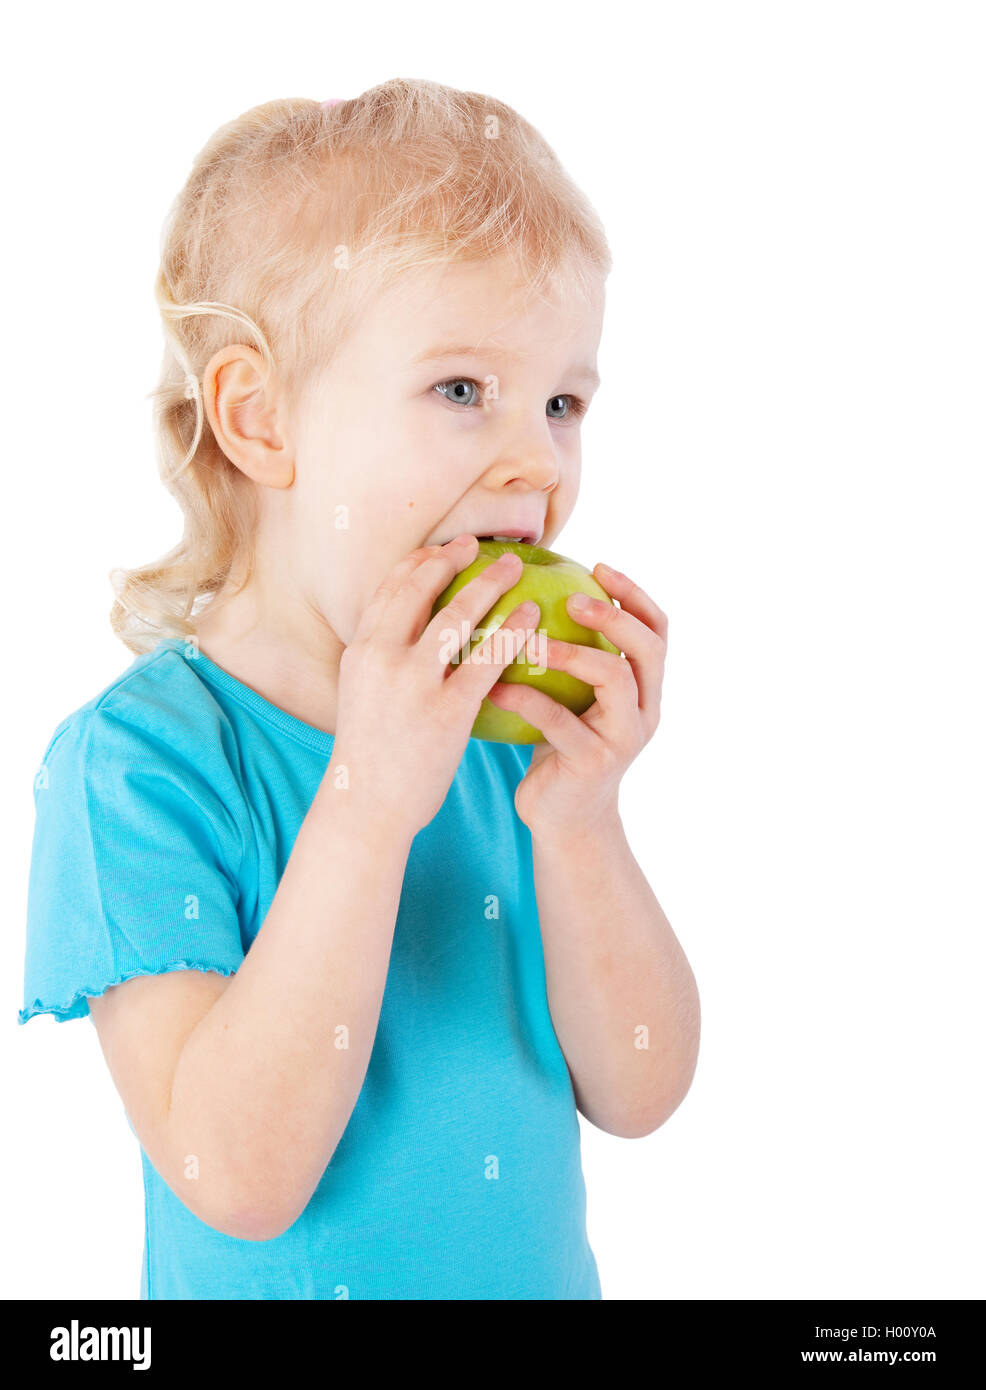 young girl eating green apple Stock Photo